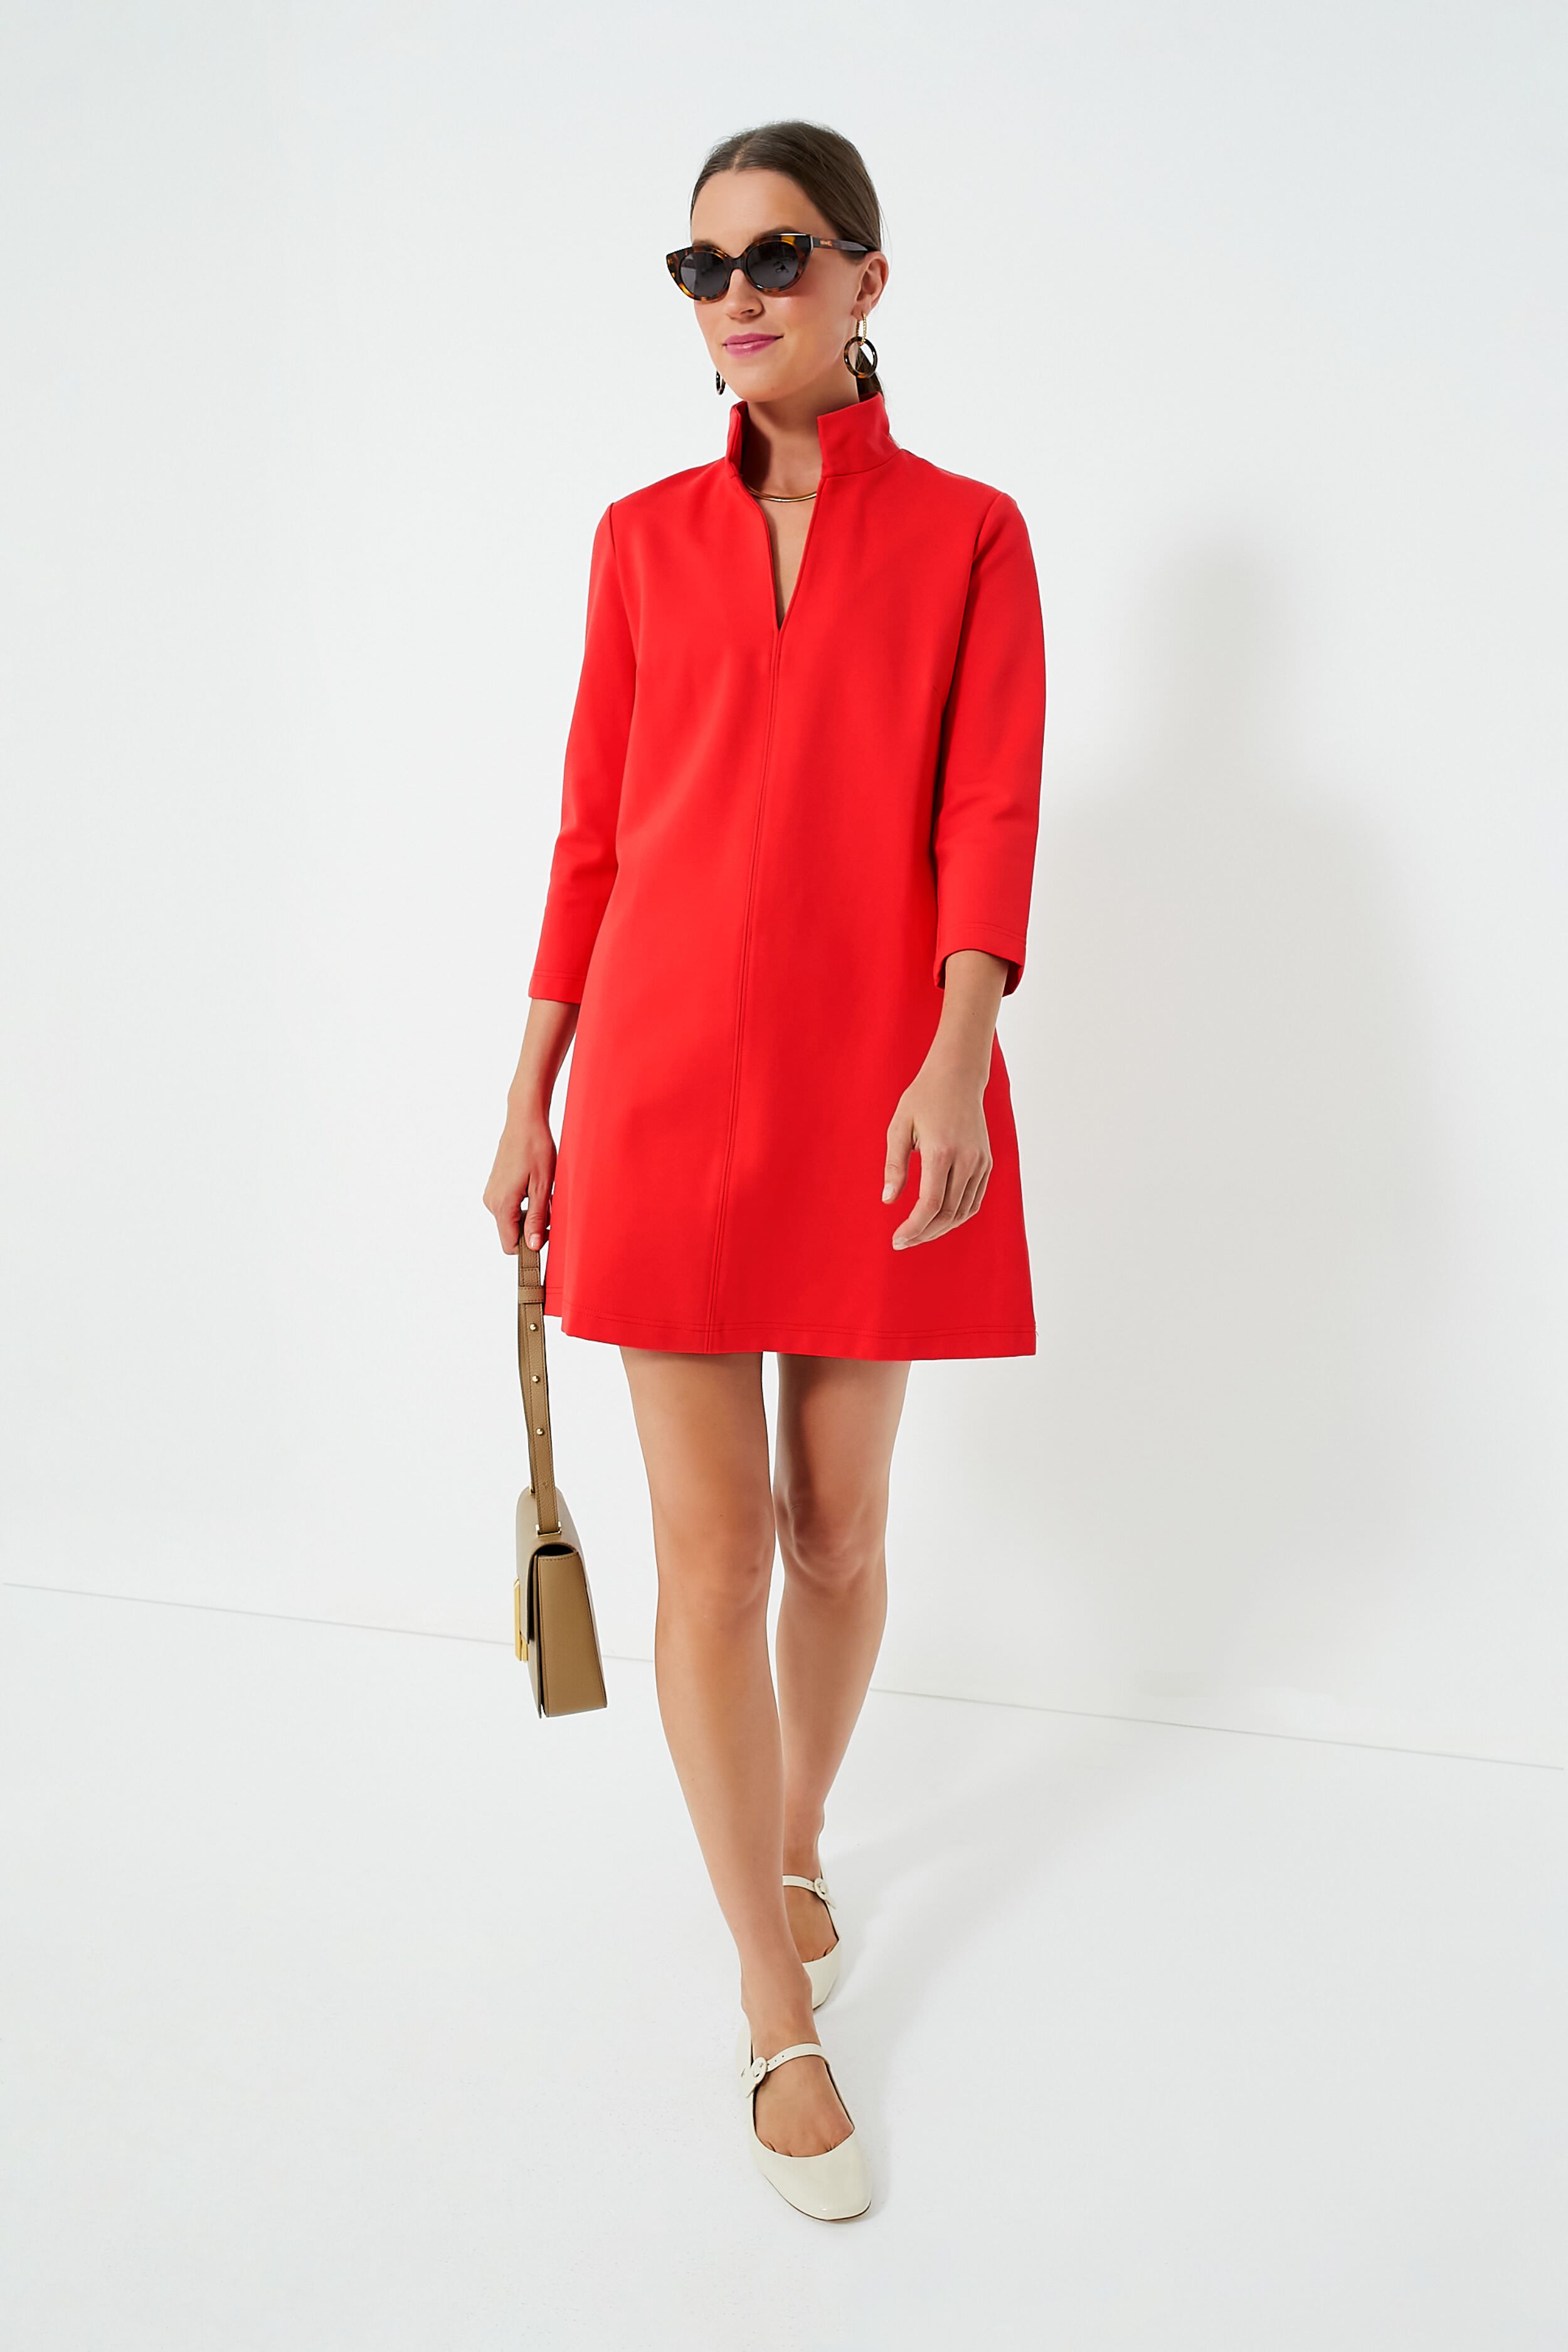 Poppy Red Ponte Clifton Dress | Tuckernuck